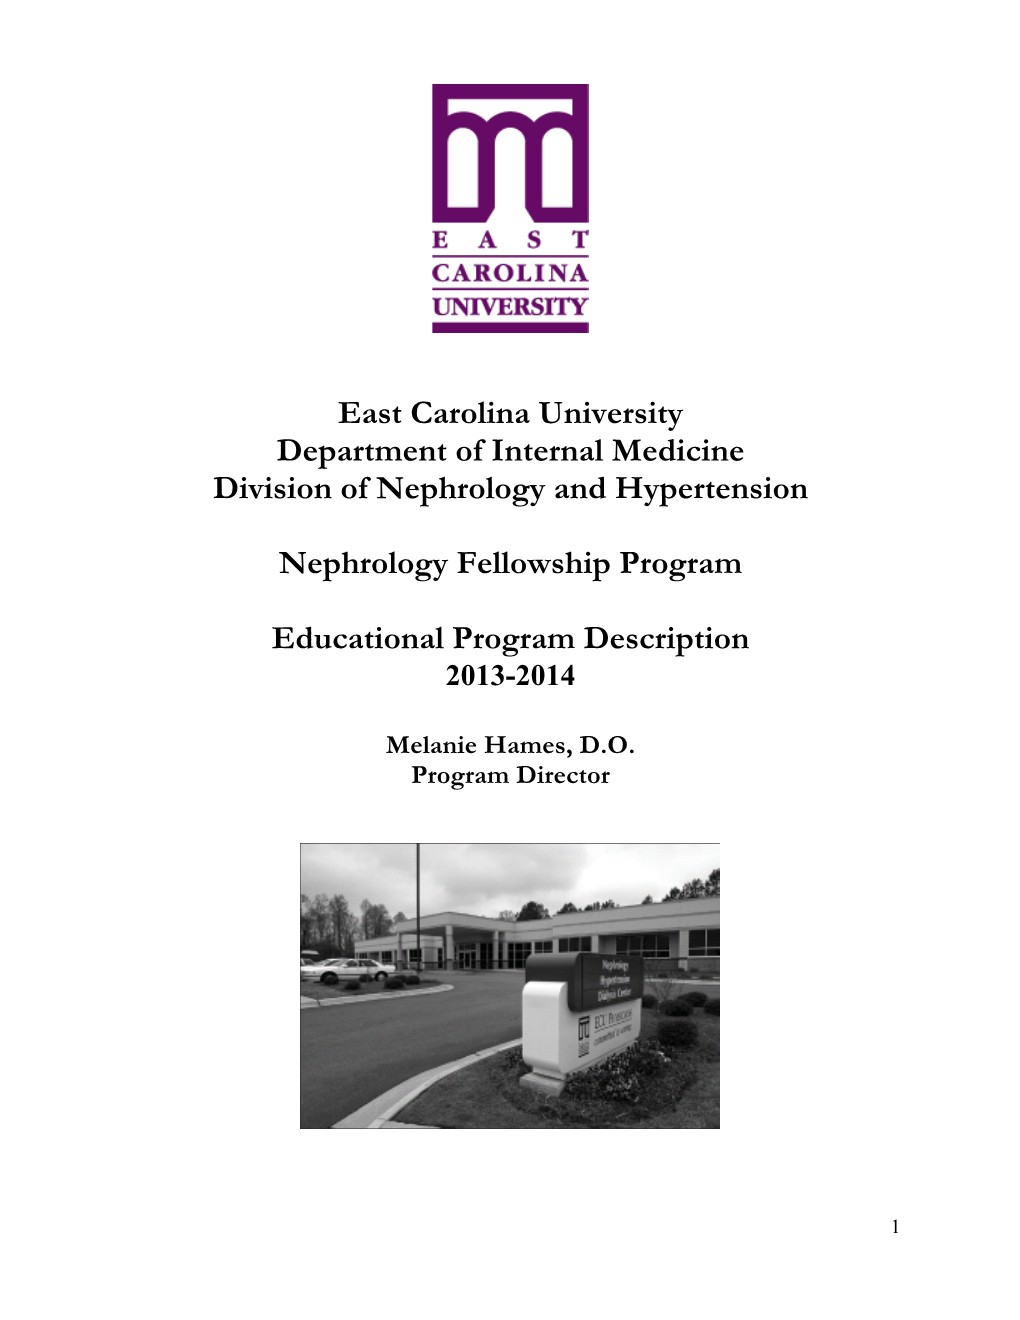 Nephrology Fellowship Program Manual (PDF)